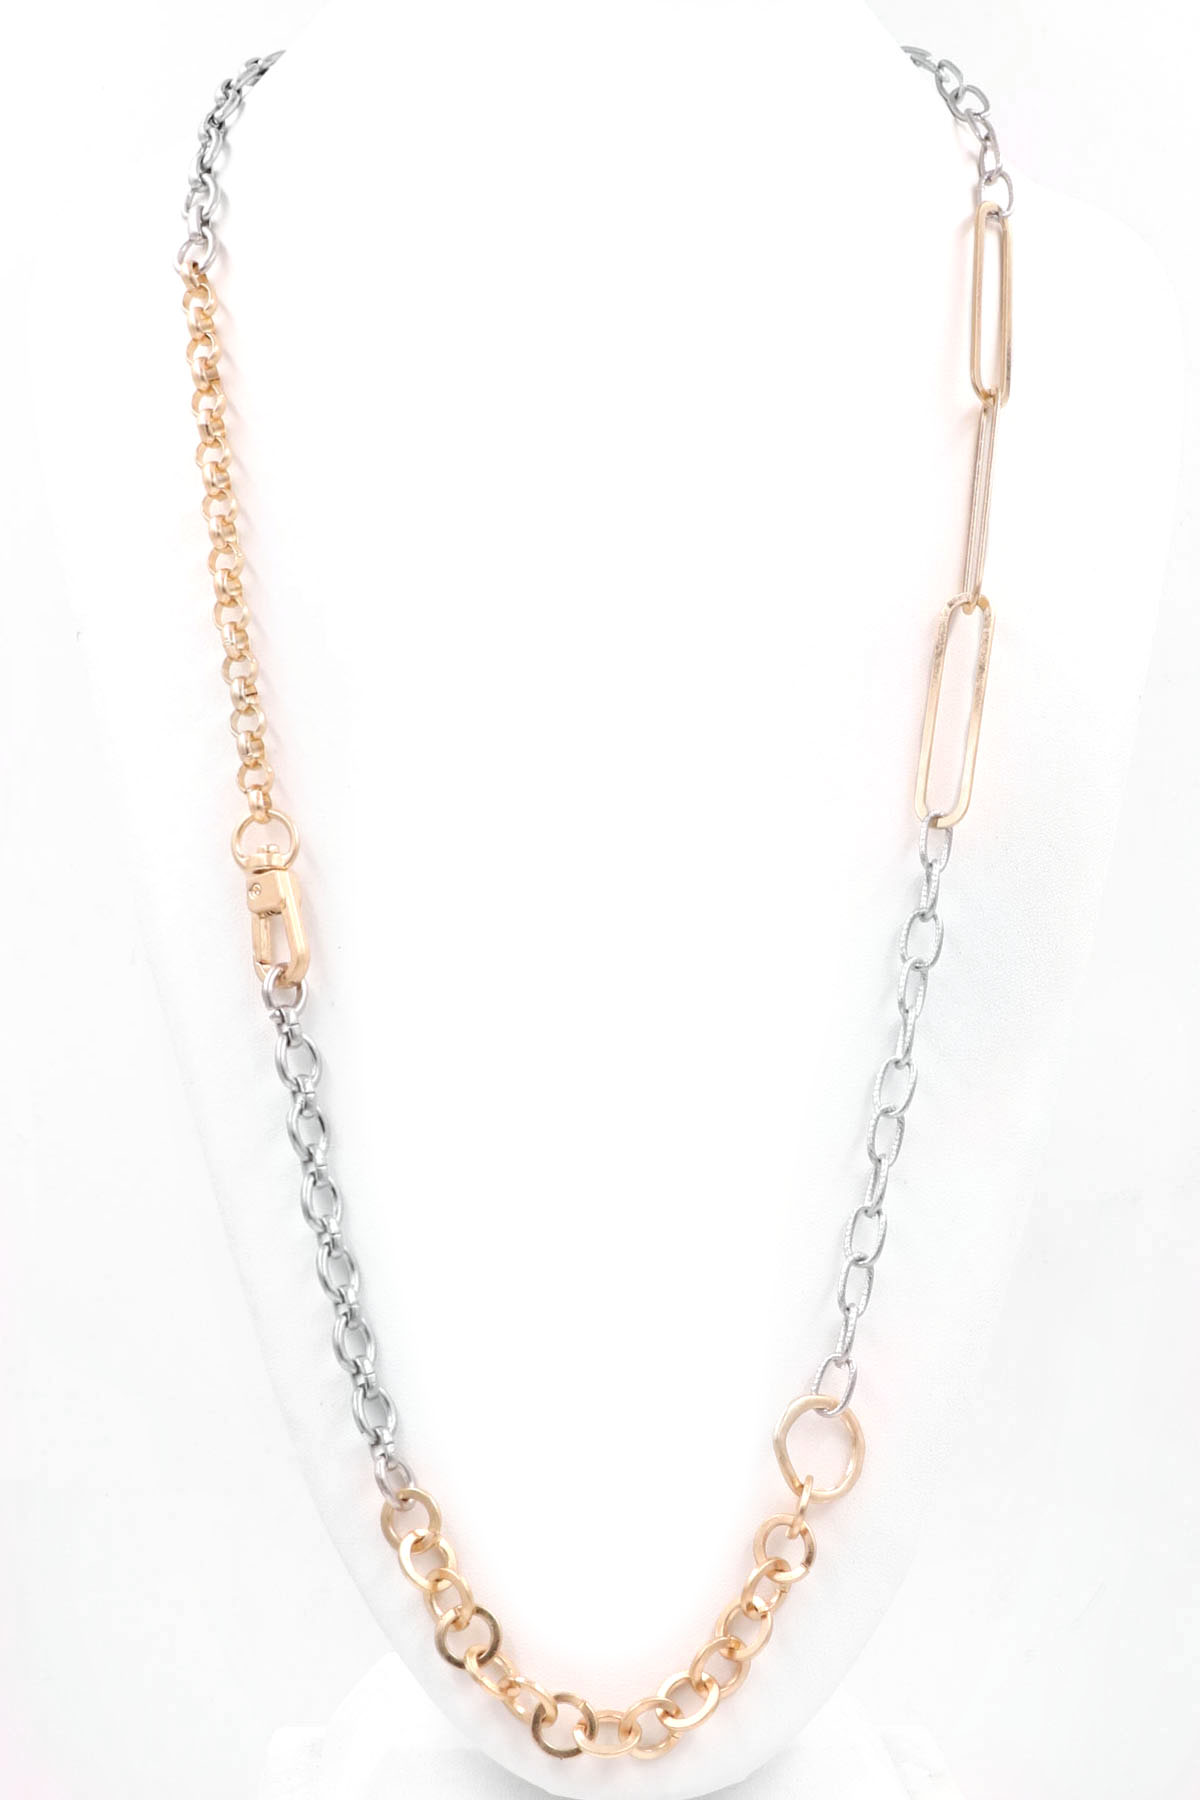 2 TONE Chain Necklace - Necklaces